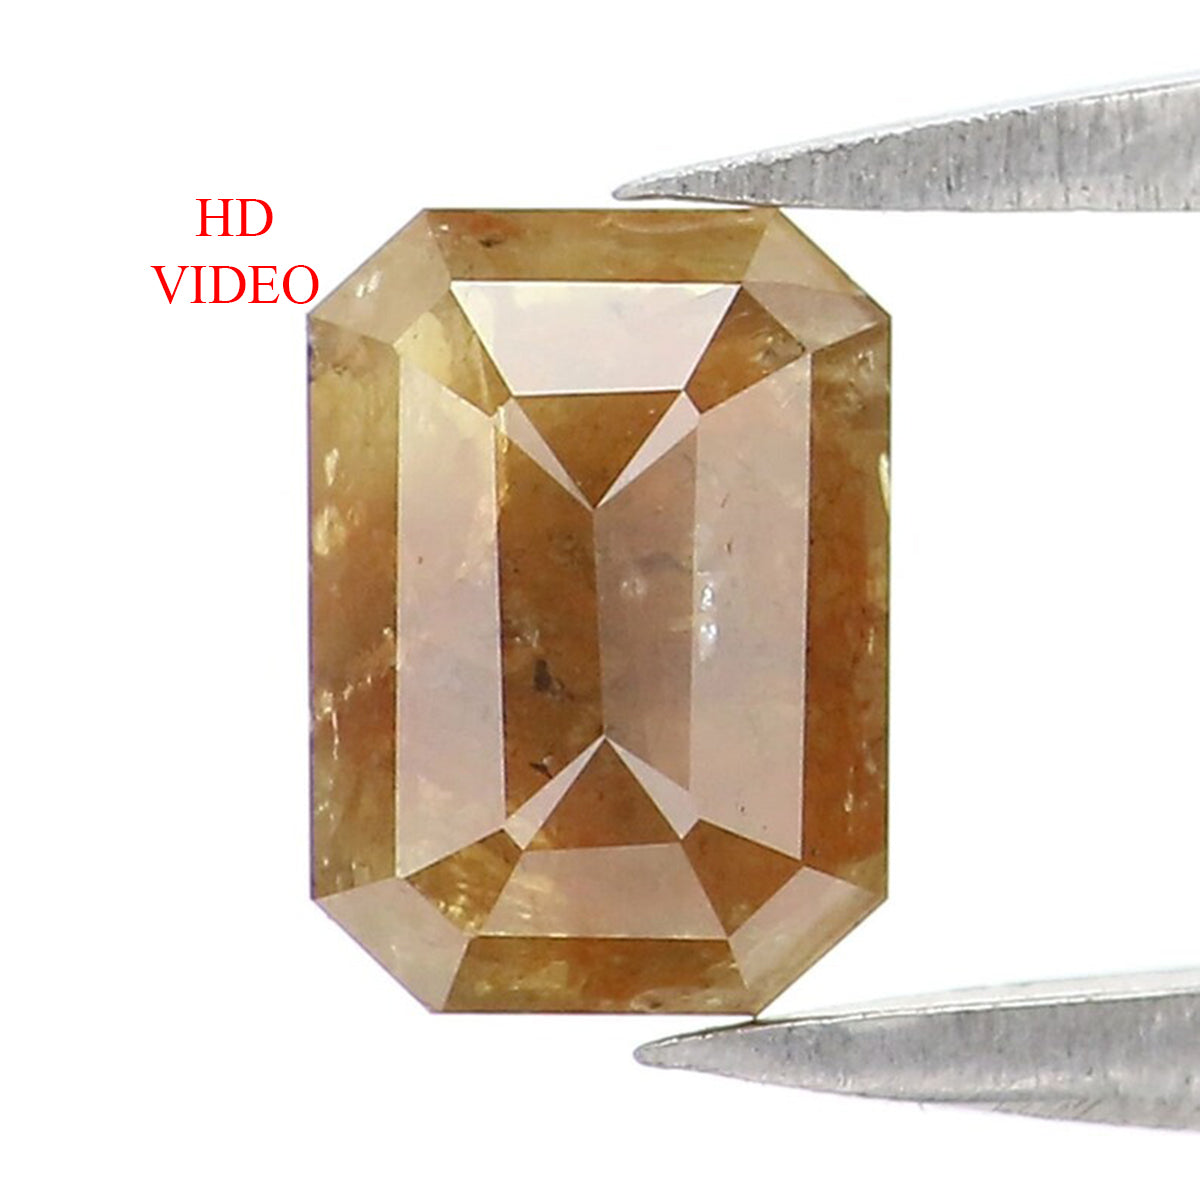 0.72 Ct Natural Loose Emerald Cut Diamond Brown Color Emerald Diamond 5.95 MM Natural Loose Diamond Brown Color Emerald Cut Diamond LQ333